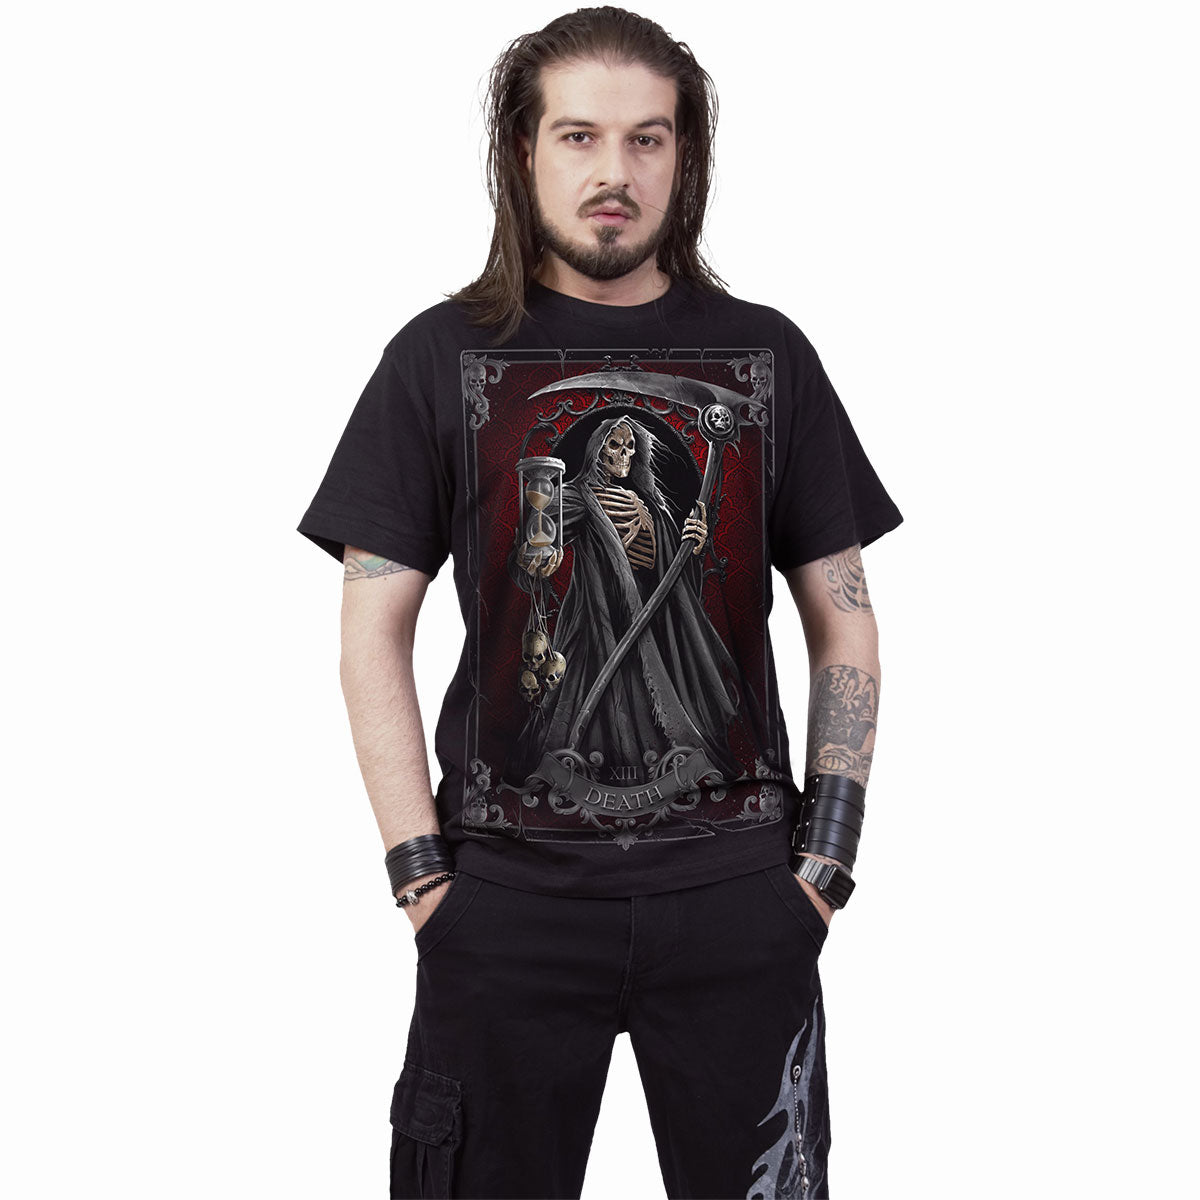 DEATH TAROT - T-Shirt Black